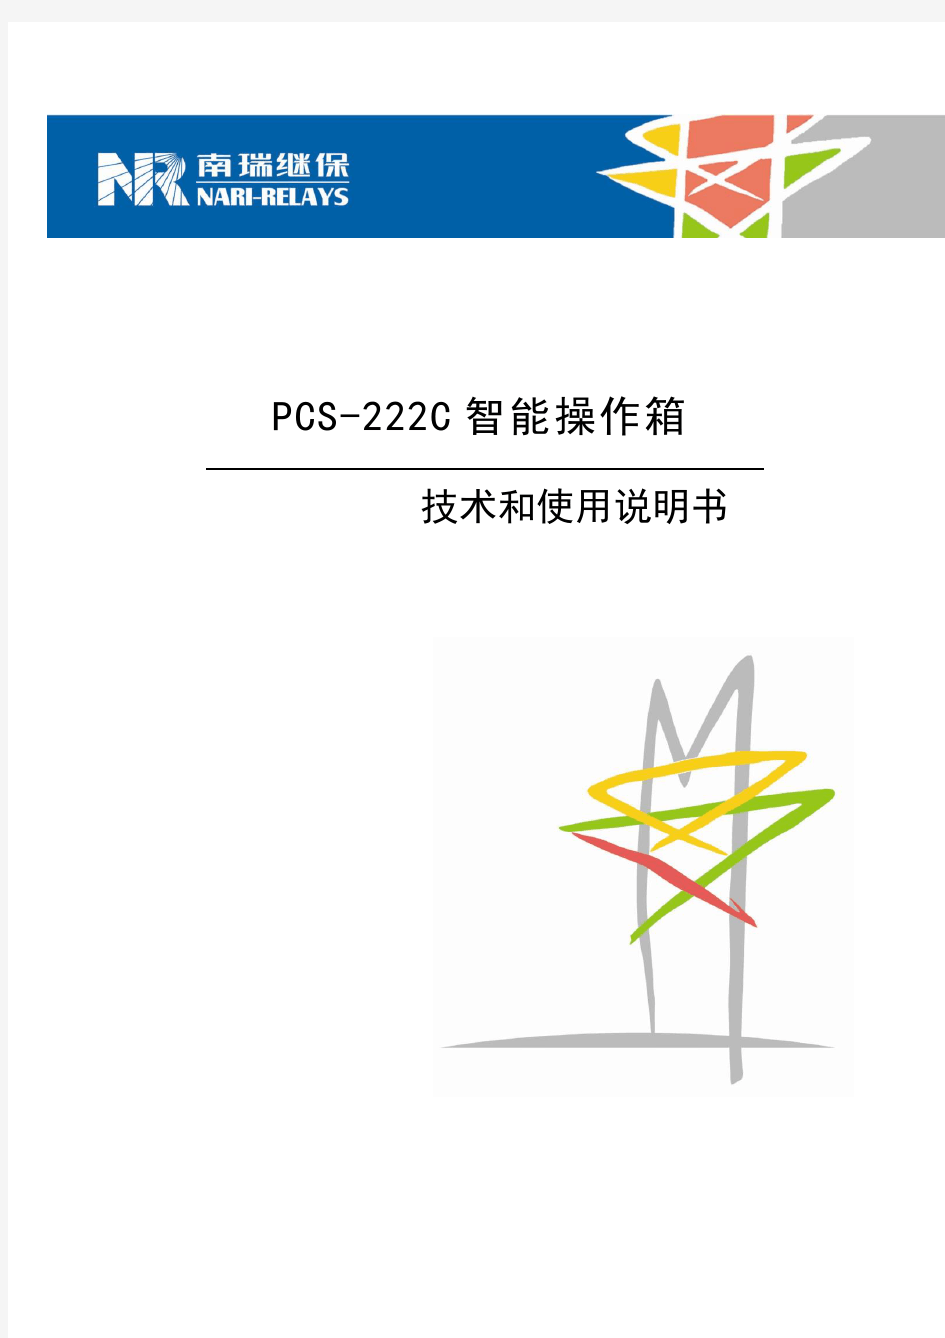 PCS-222C智能操作箱说明书